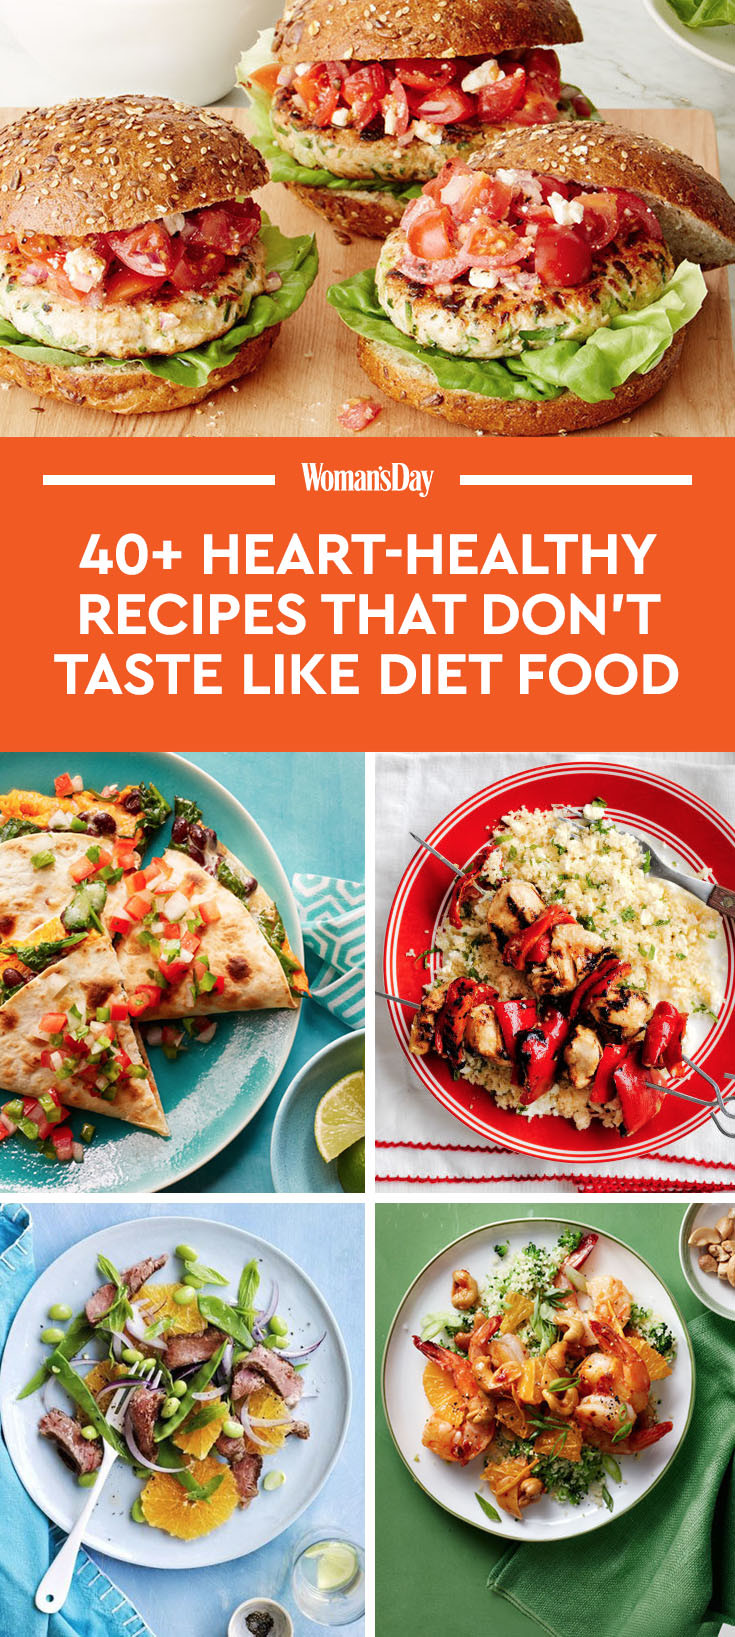 Heart Healthy Dinner Recipes
 55 Heart Healthy Dinner Recipes That Don t Taste Like Diet